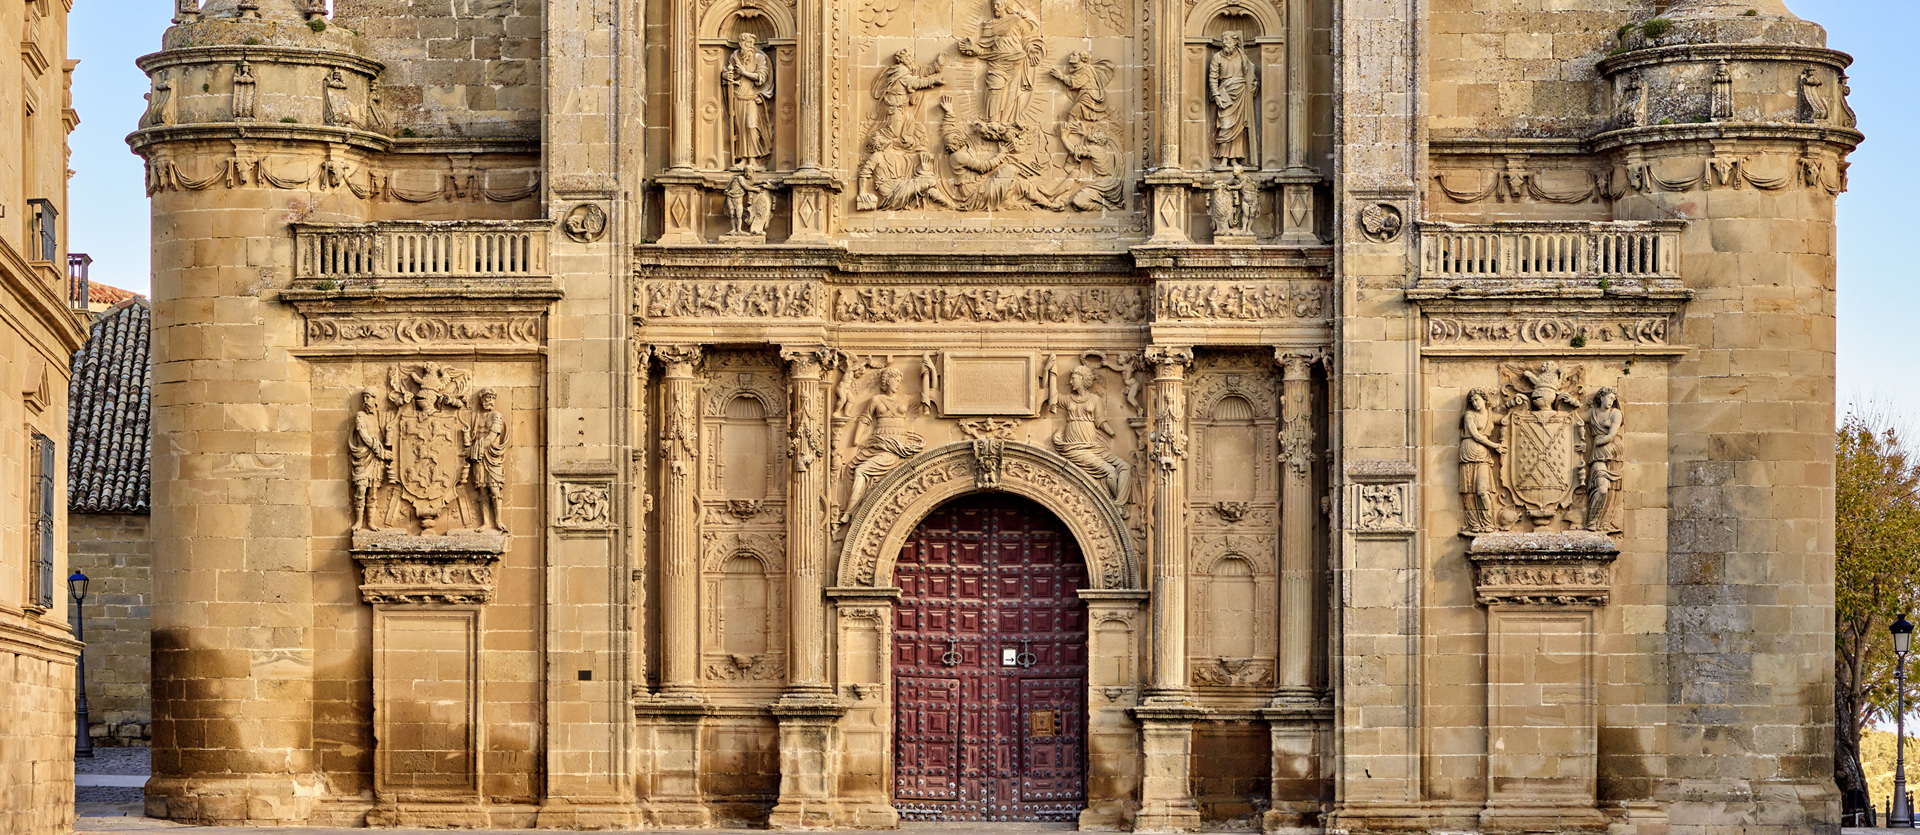 Dettaglio. Facciata sacra della Cappella del Salvatore a Úbeda. Jaén